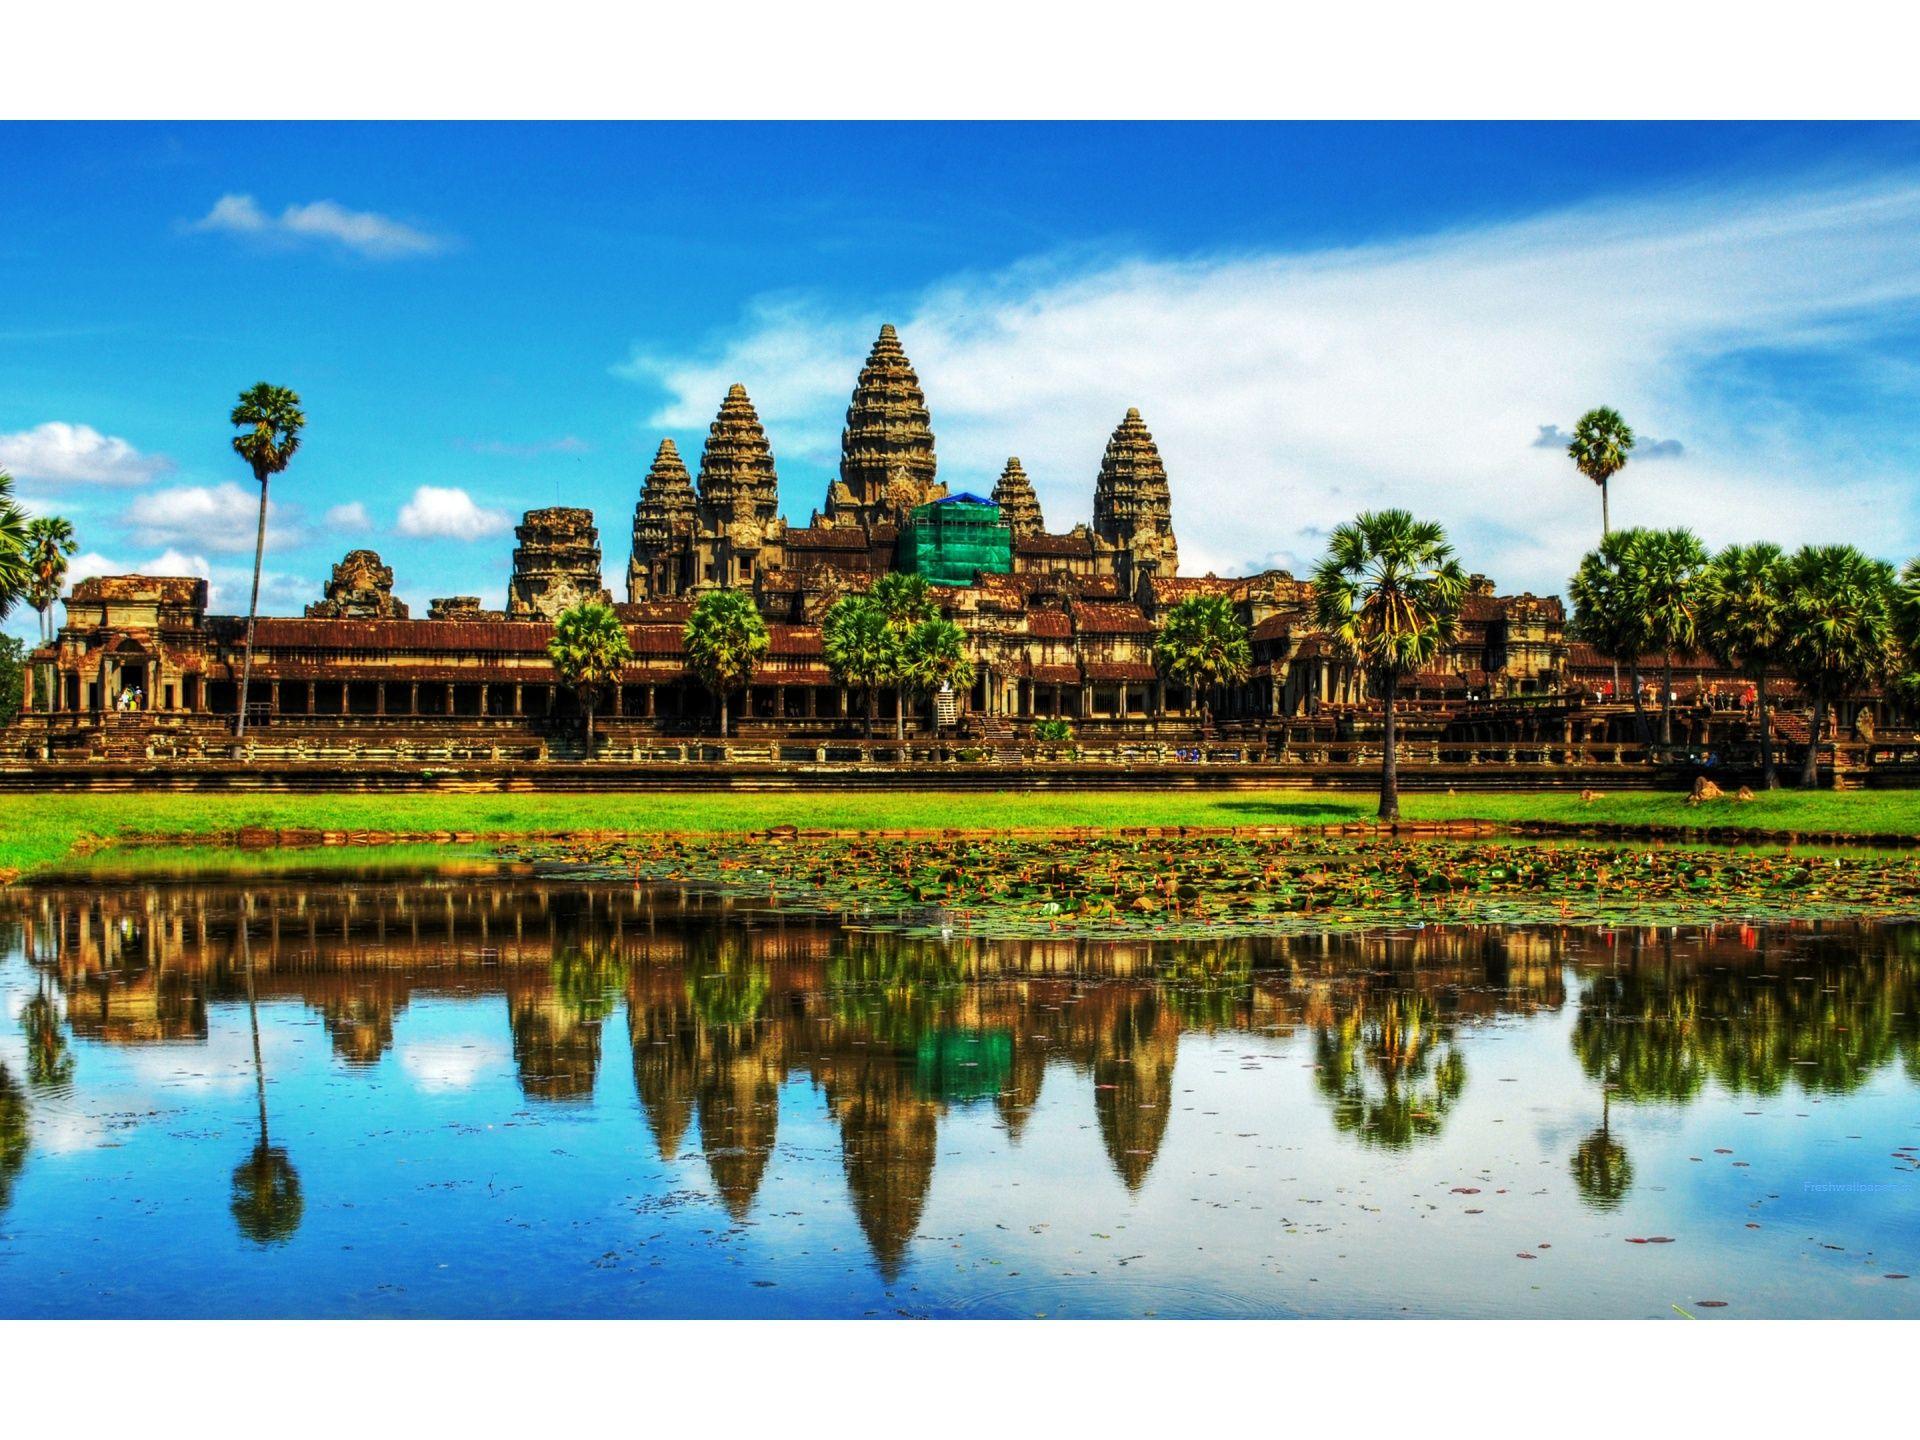 Angkor Wat Temple Cambodia wallpaper